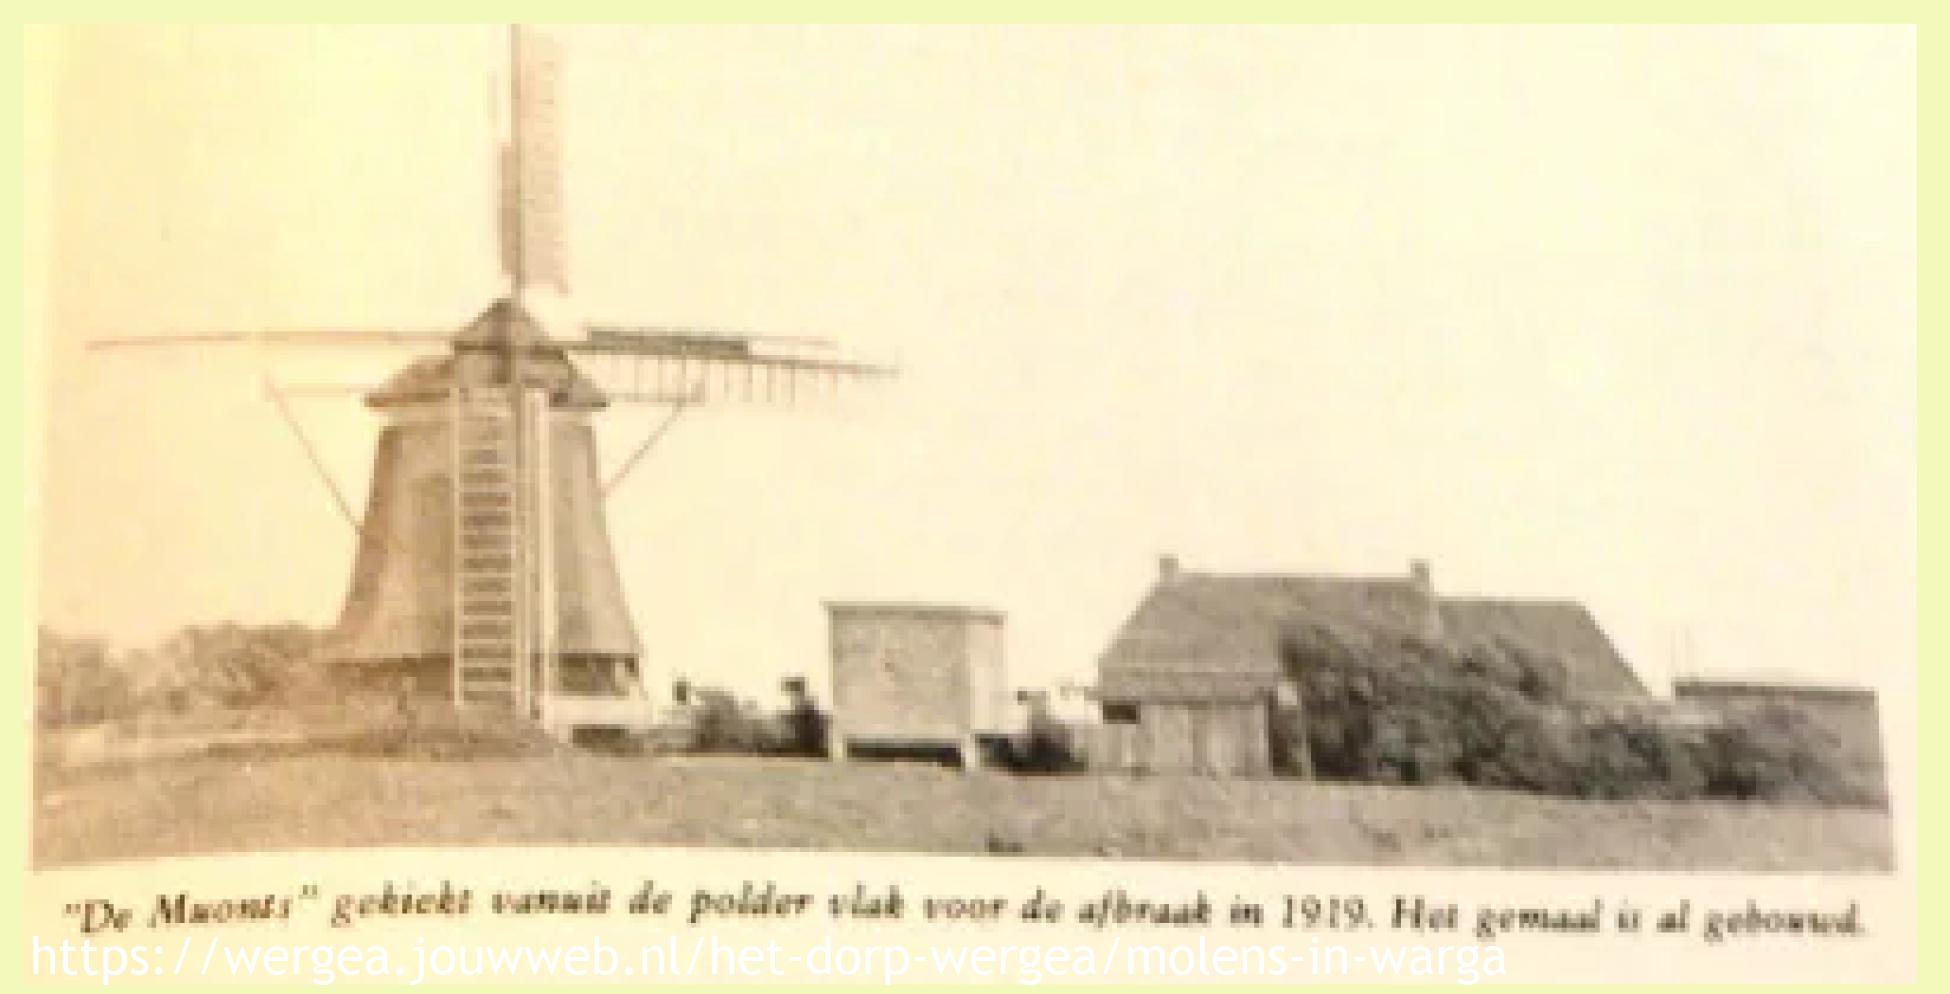 Poldermolen "Muonts" Wergaester Mar (afgebroken 1919)